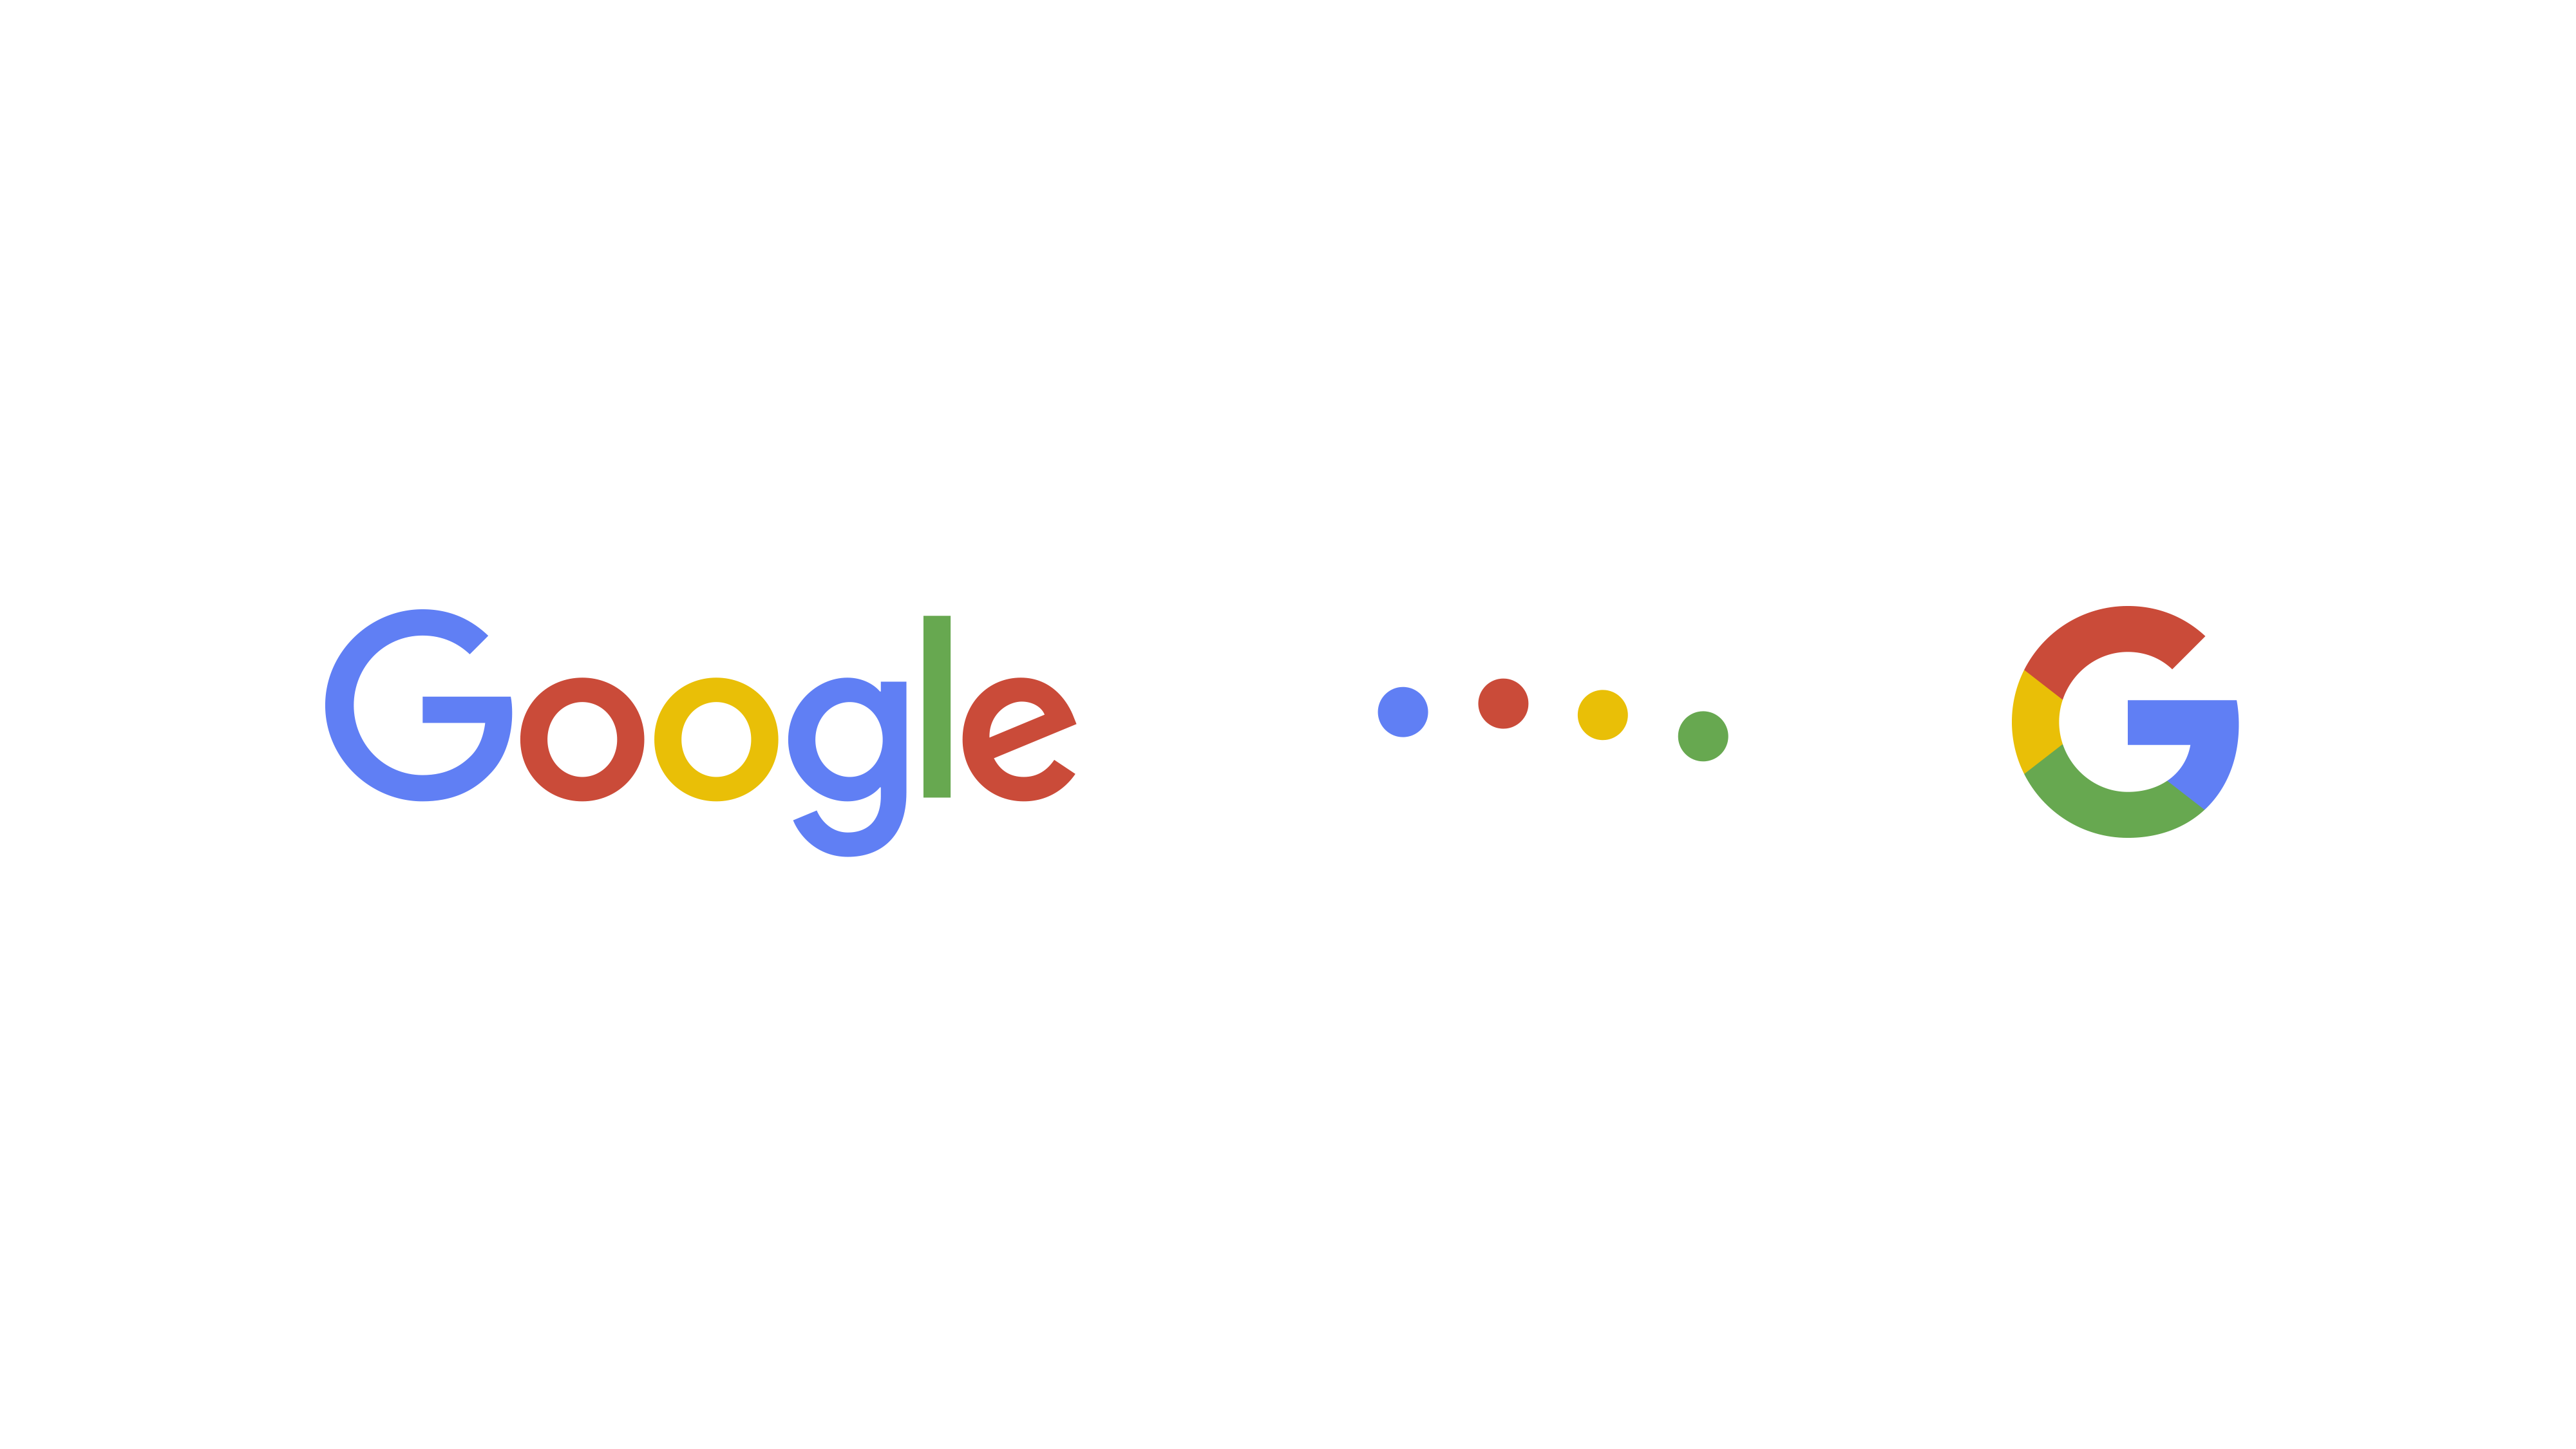 Goggle. Фирменный знак гугл. Логотип компании гугл. Логотип гугл для фотошопа.